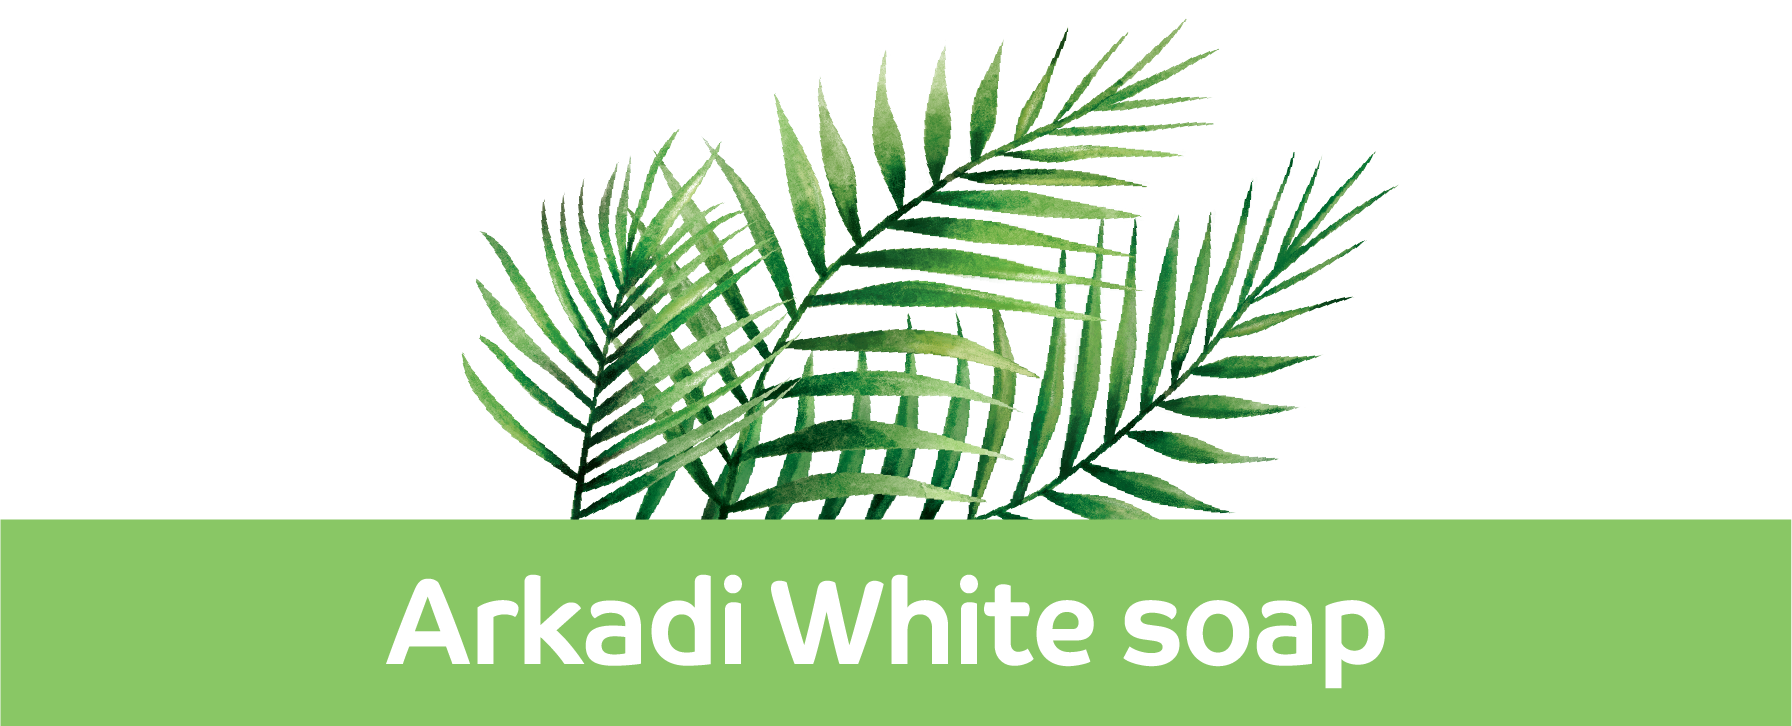 Arkadi Classic White Soap bar - Soap Factory Arkadi